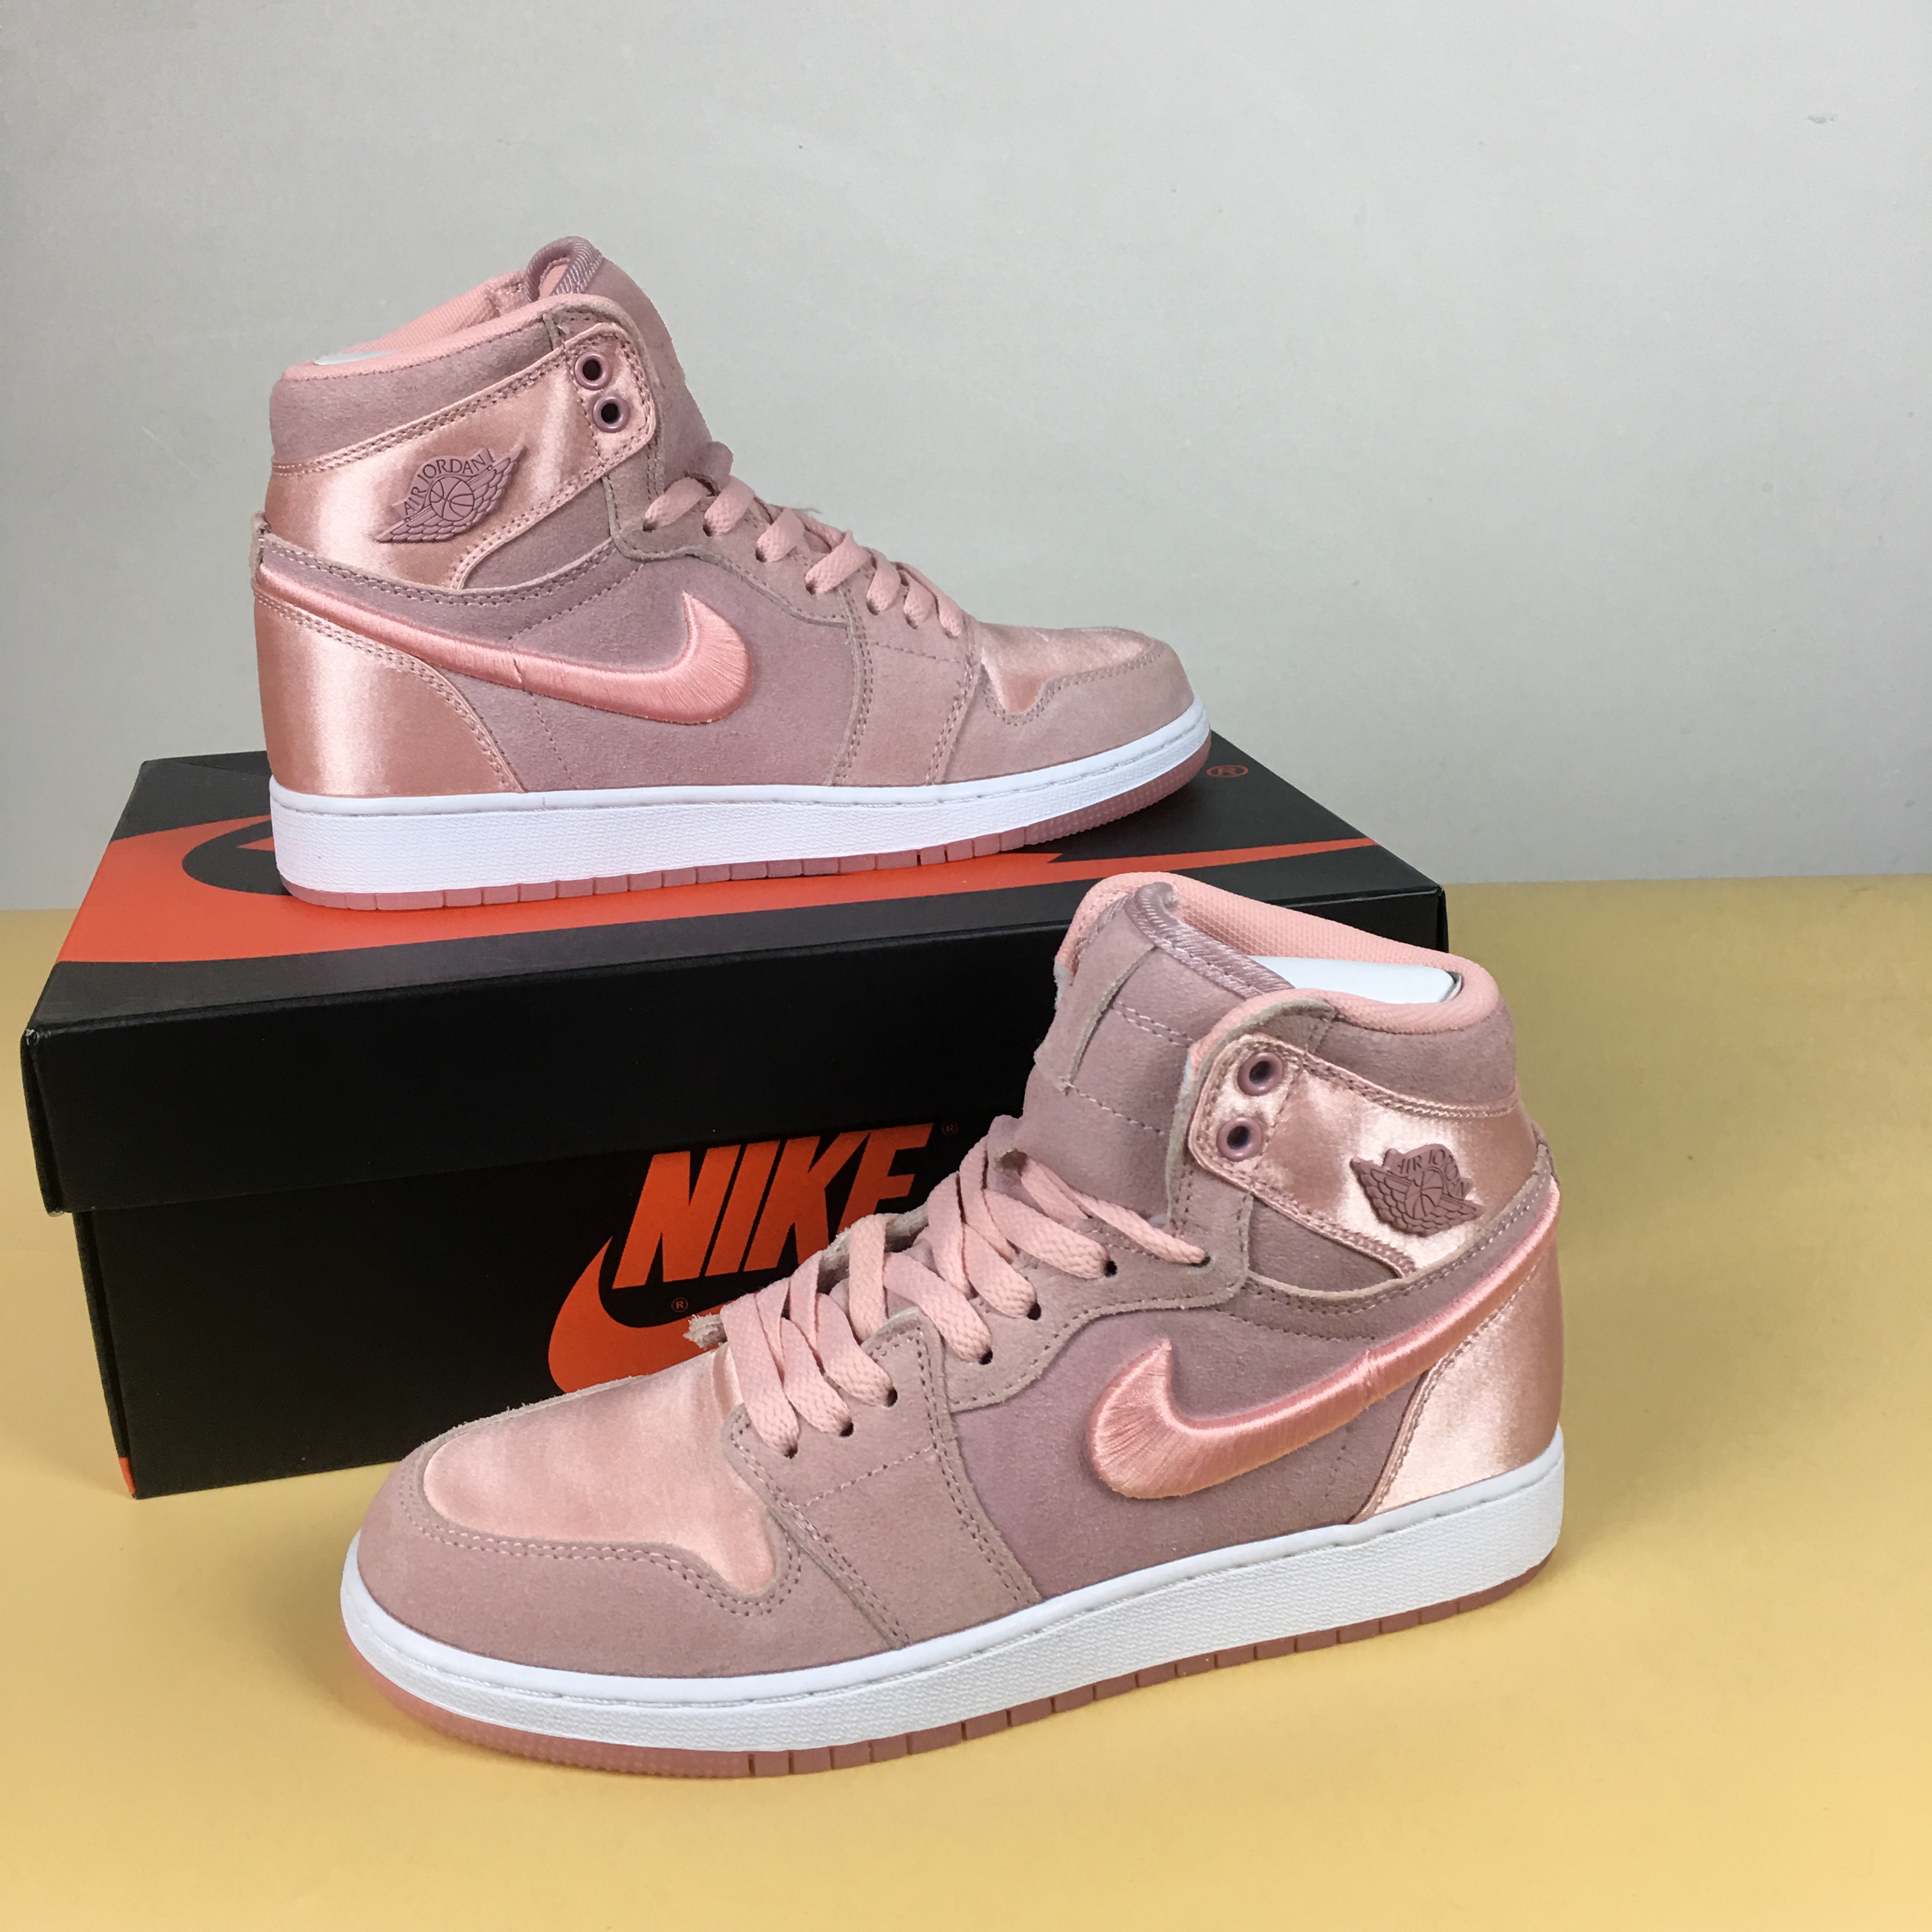 New Air Jordan 1 Satin Pink White Shoes For Women